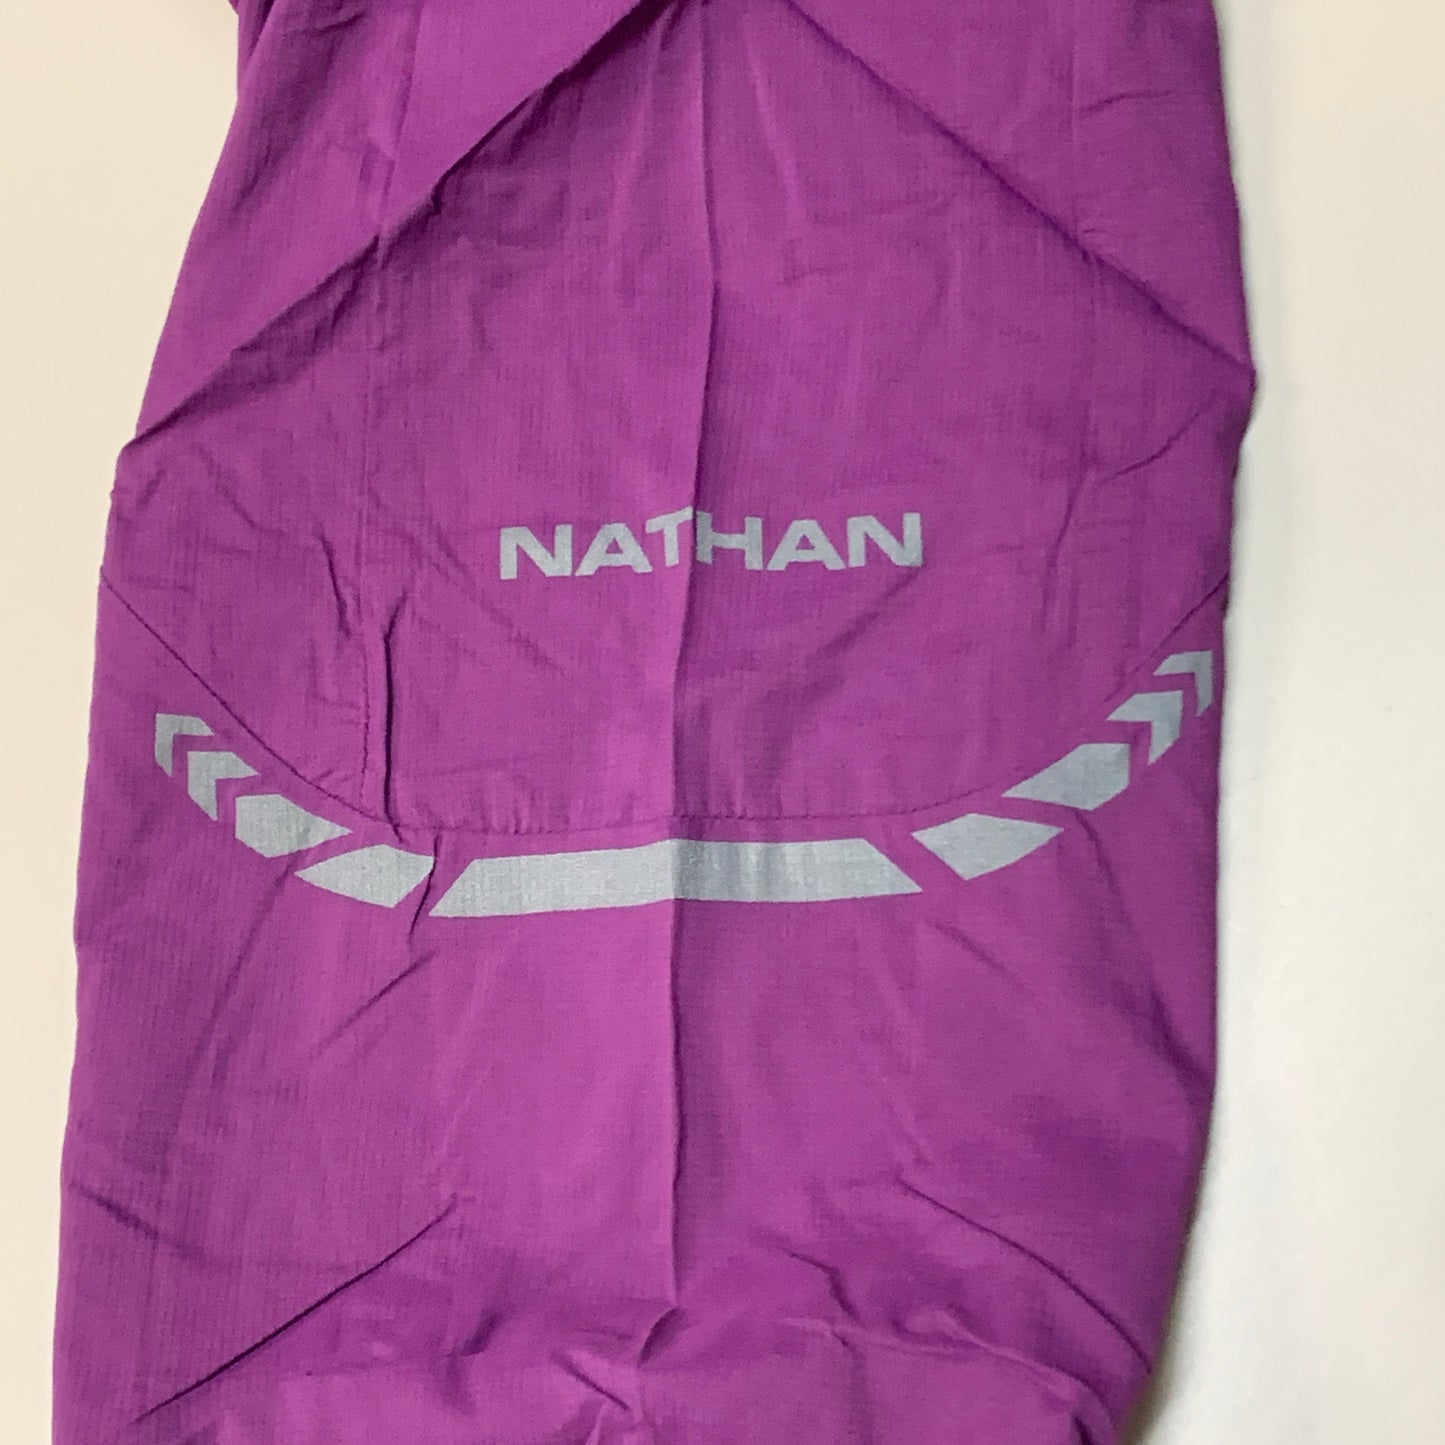 NATHAN Stealth Jacket W/ Hood Women's Plum Size L NS90080-70030-L